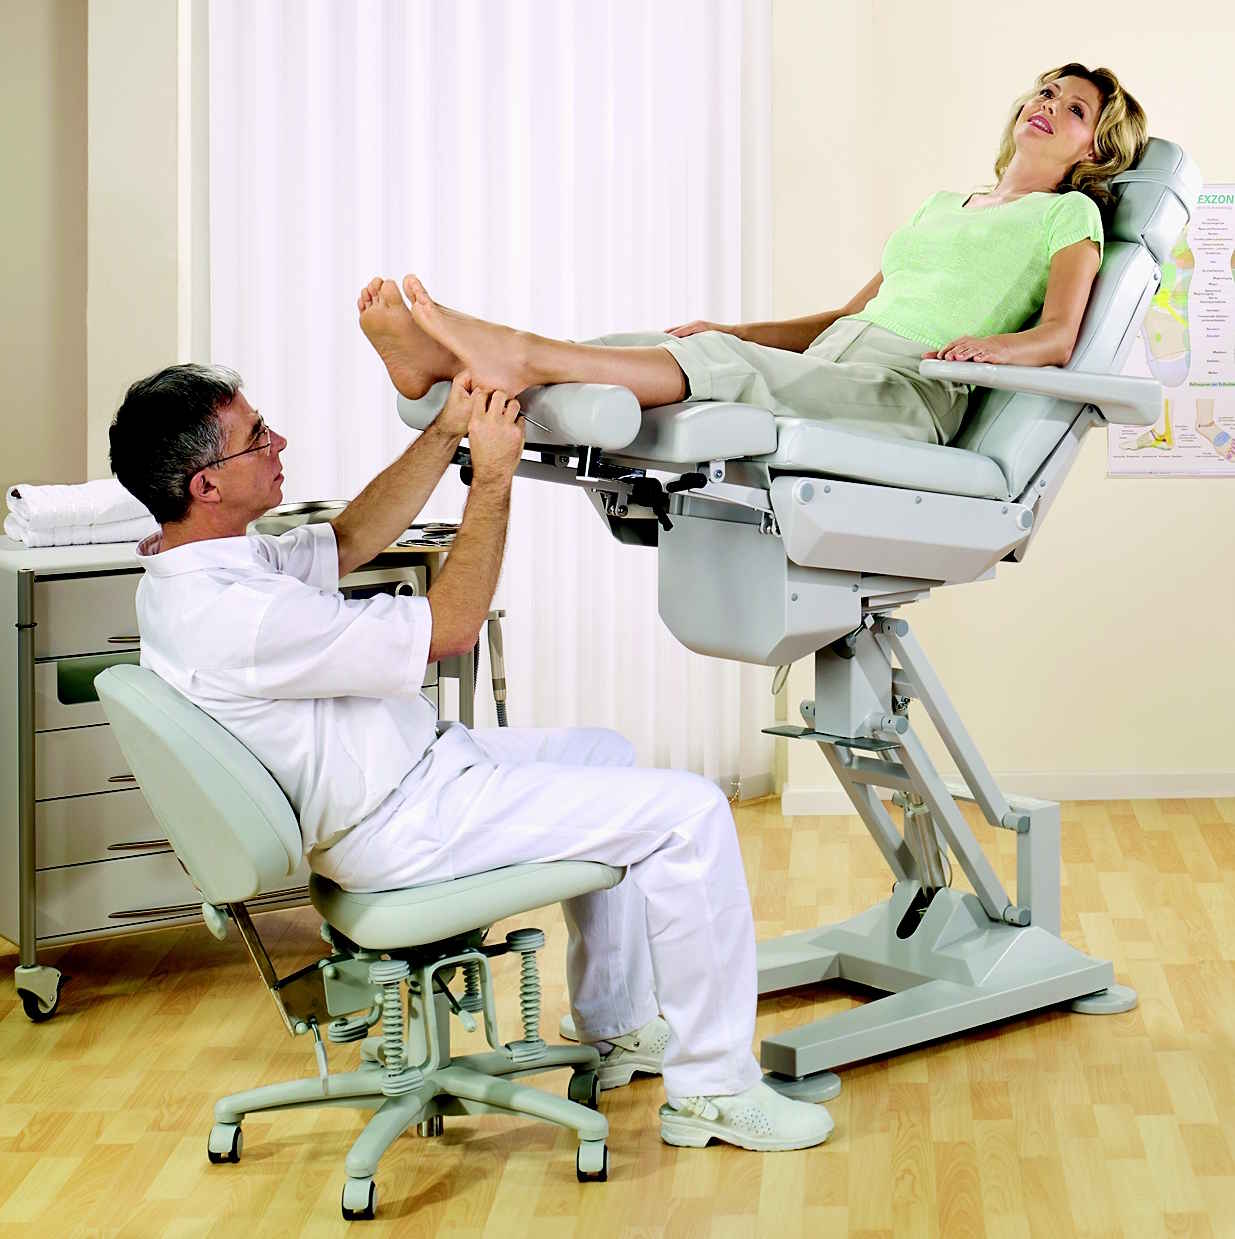 Мужчина на приеме у гинеколога. 151540 Кресло гинекологическое. Гинекологическое кресло Зерц. Кресло проктолога. Осмотр гинеколога на кресле.